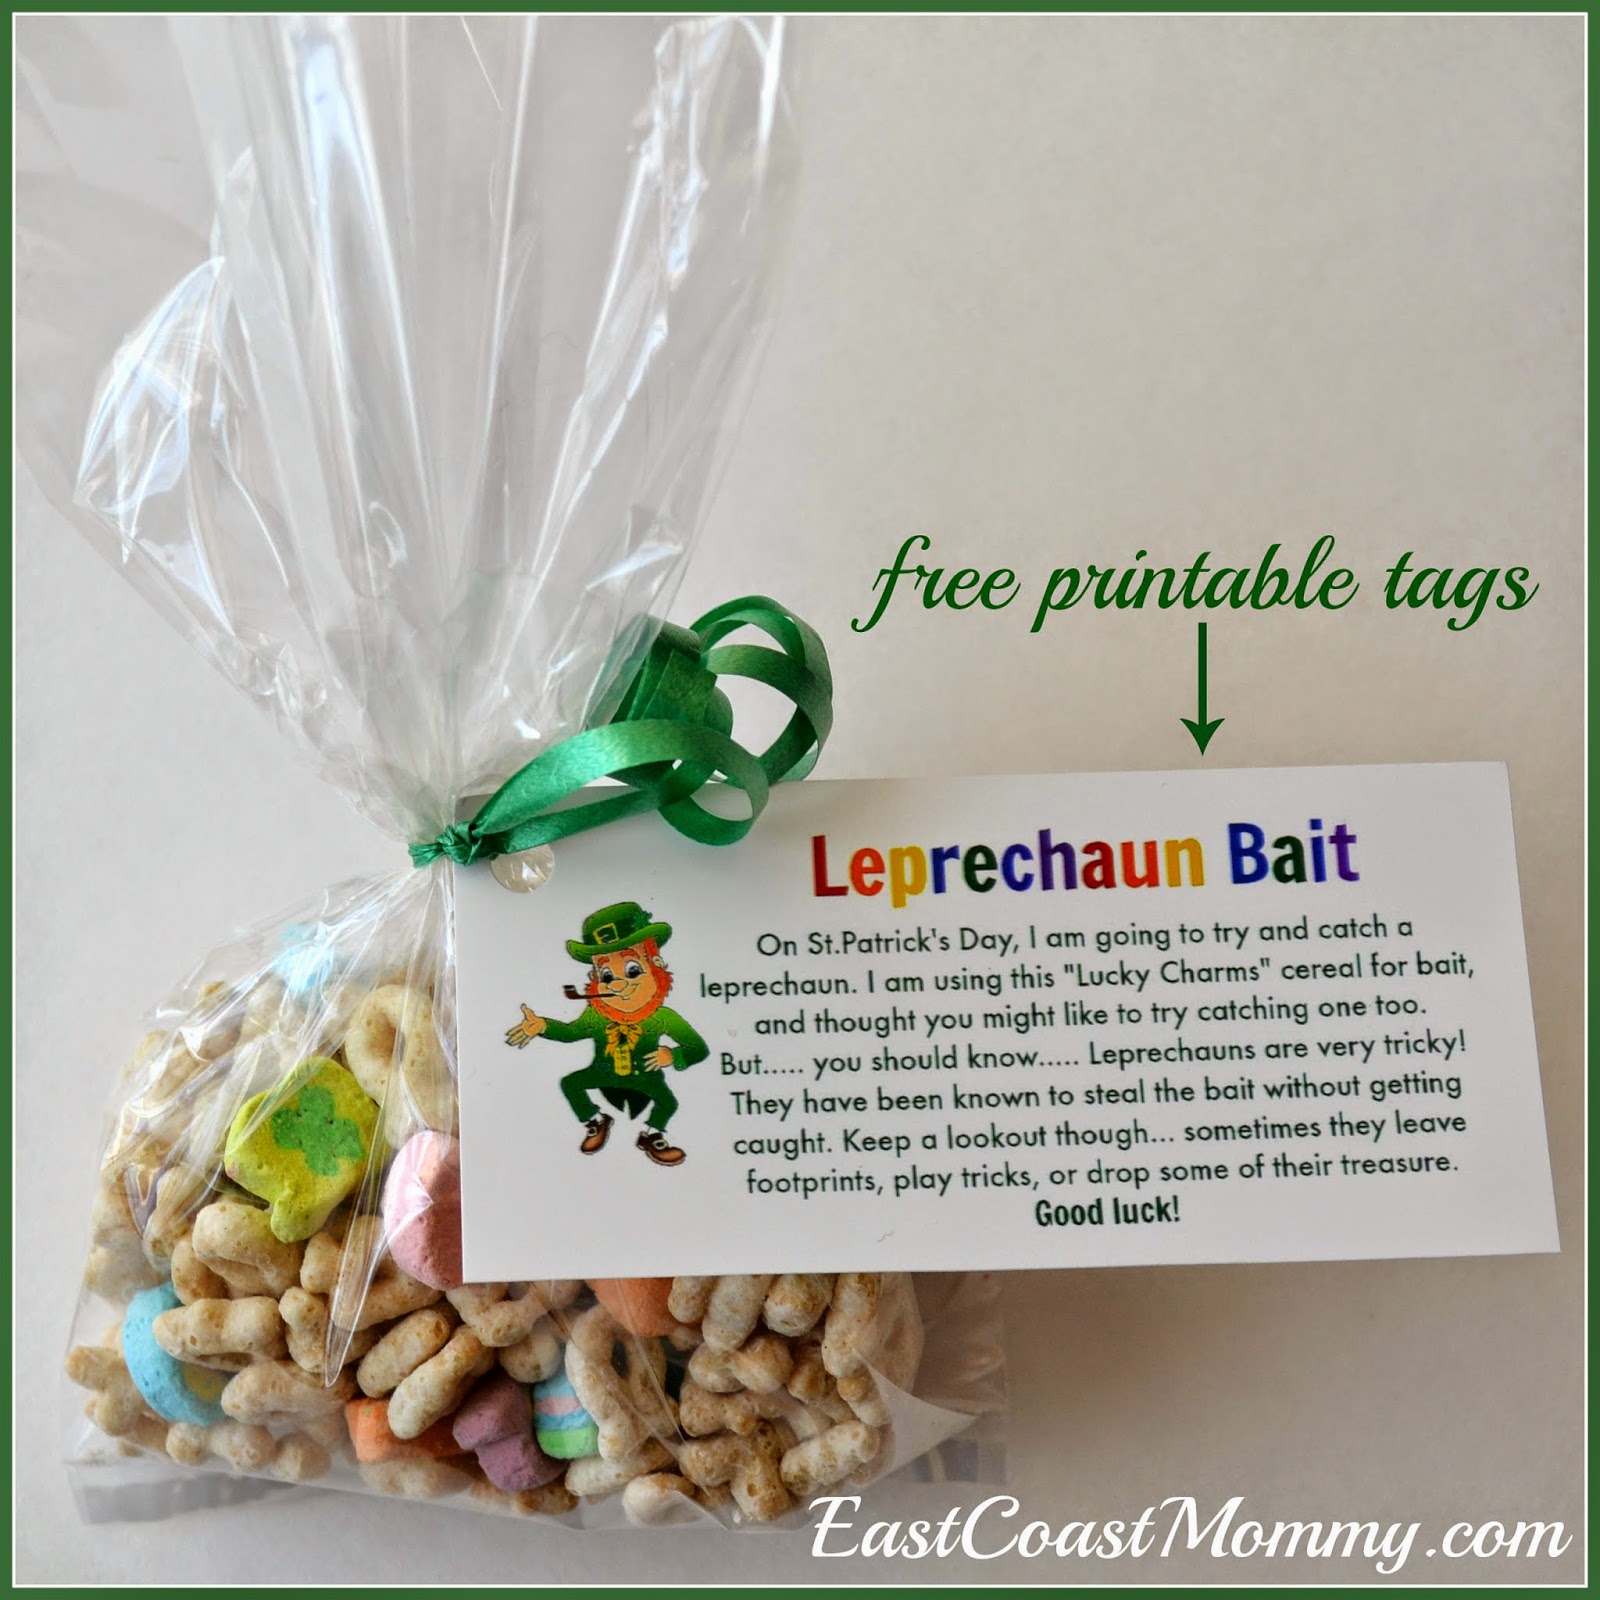 east-coast-mommy-leprechaun-bait-with-free-printable-tags